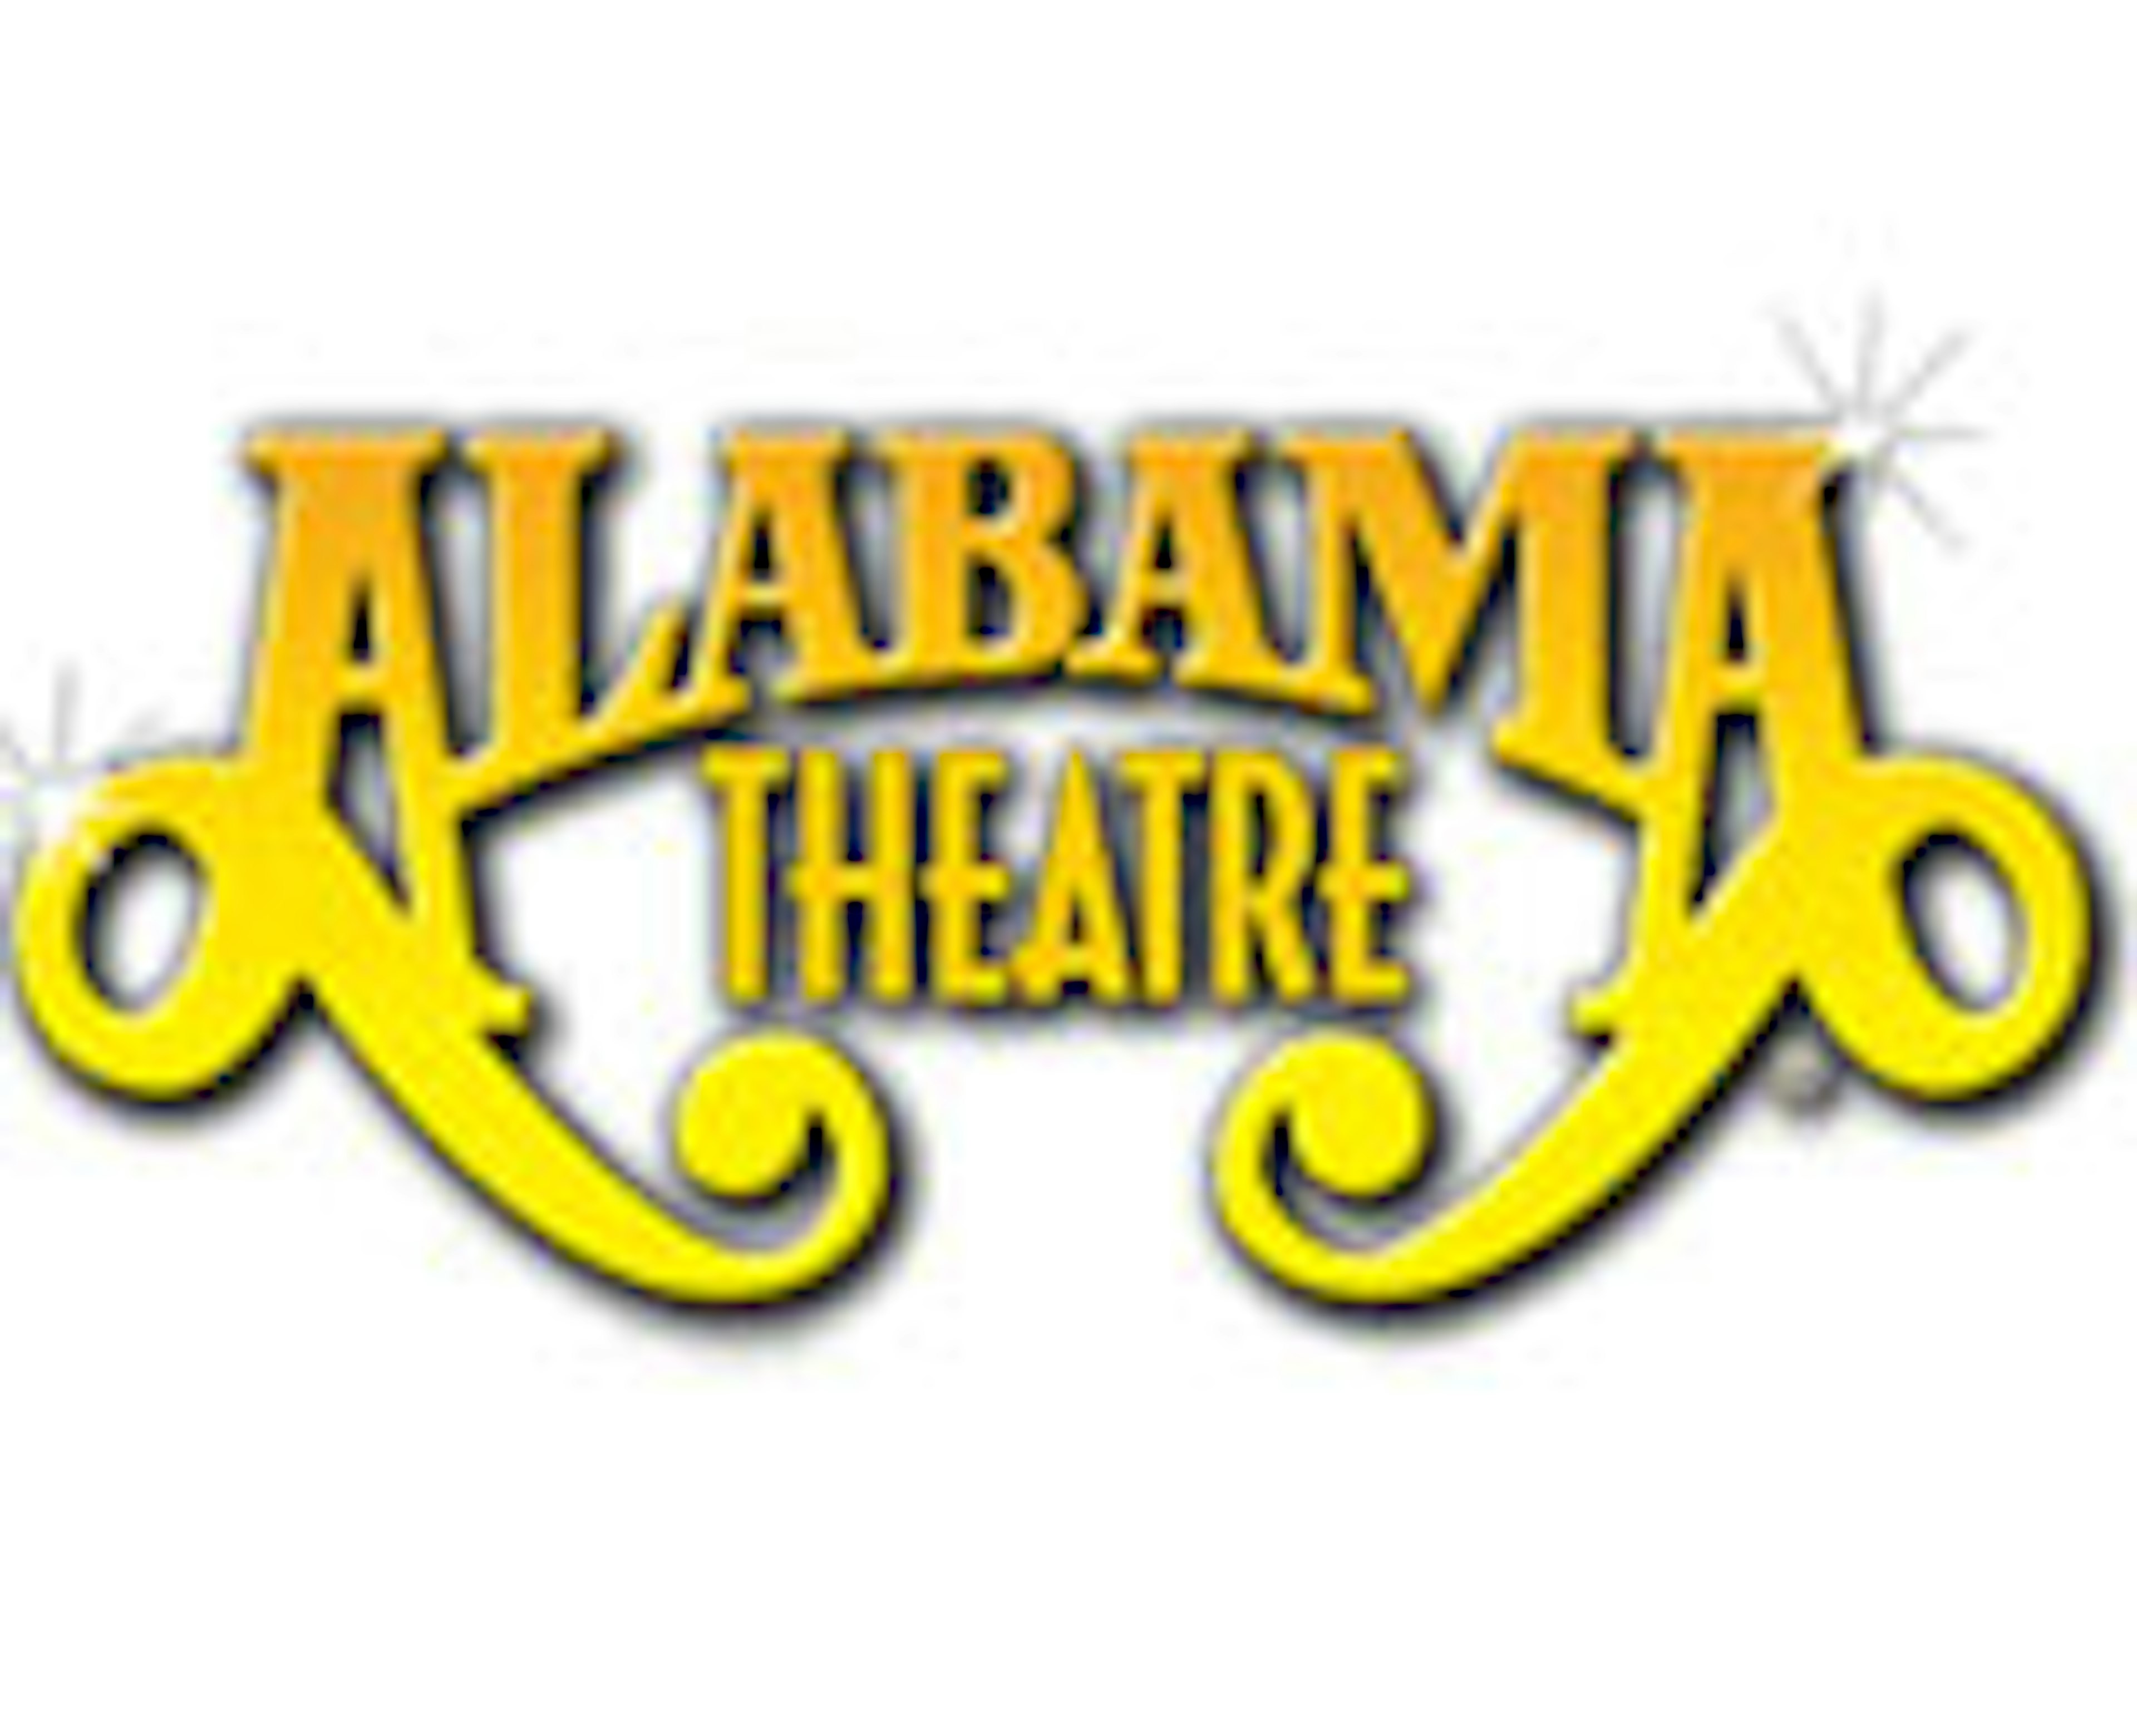 Alabama Theatre: ICONIC!